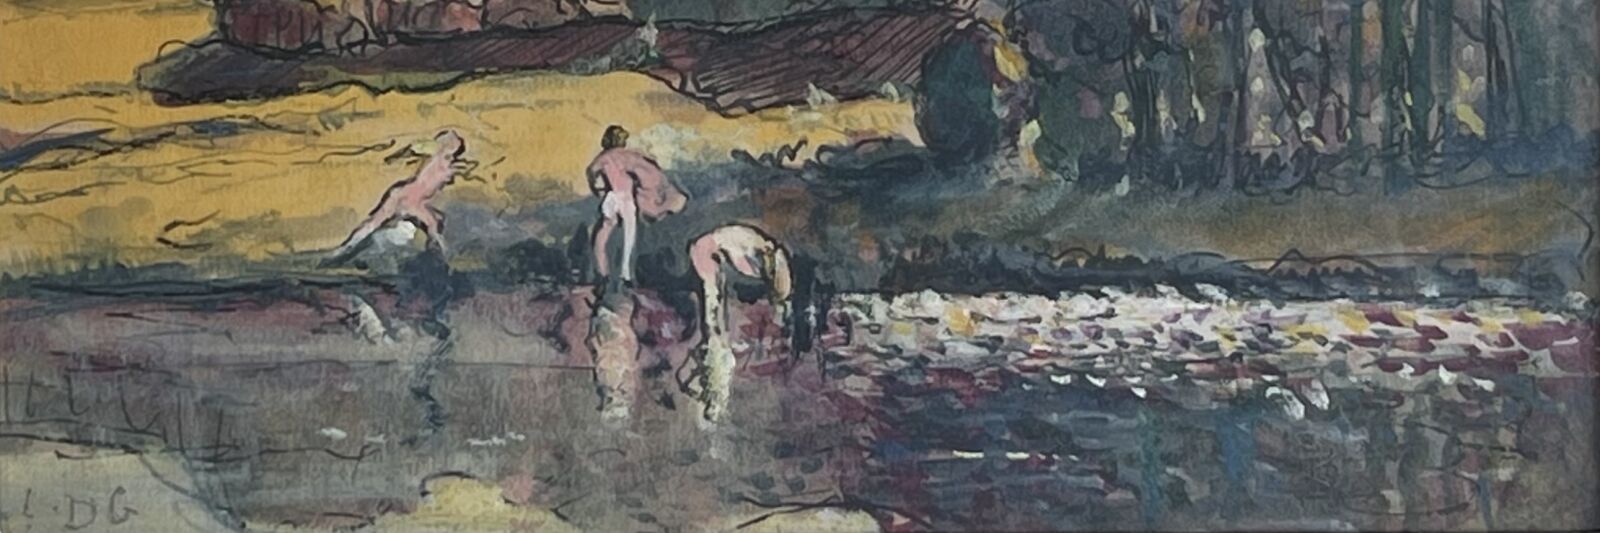 Null 莱昂-杜瓦尔-戈兹兰（1853-1941） 
沐浴
纸上水粉画，左下方有 LDG 字样。
8.4 x 24.5 厘米